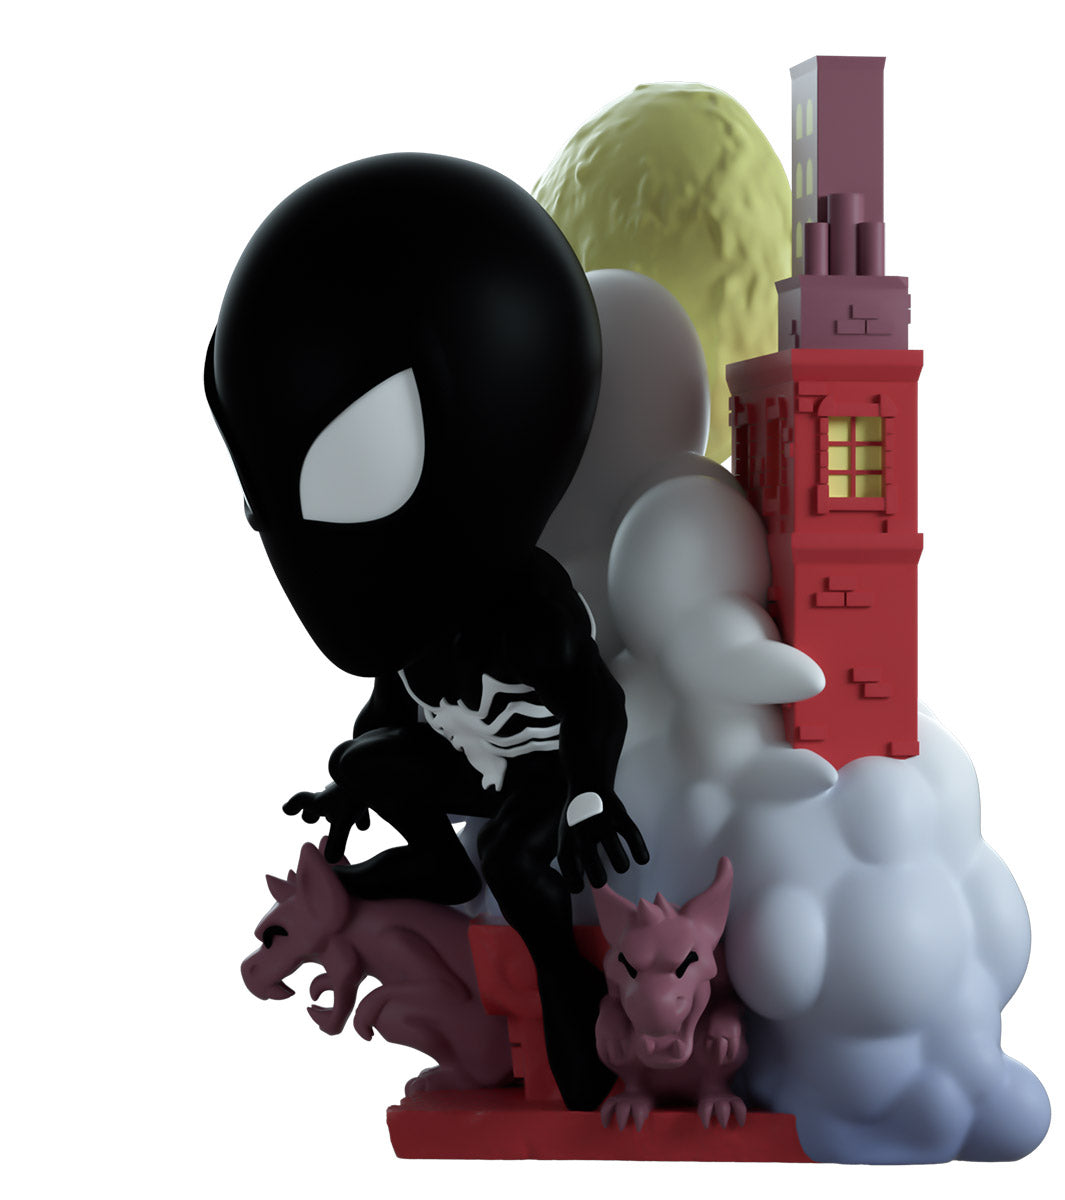 Marvel Vinyl Diorama SpiderMan Web of Spider-Man #1 Youtooz